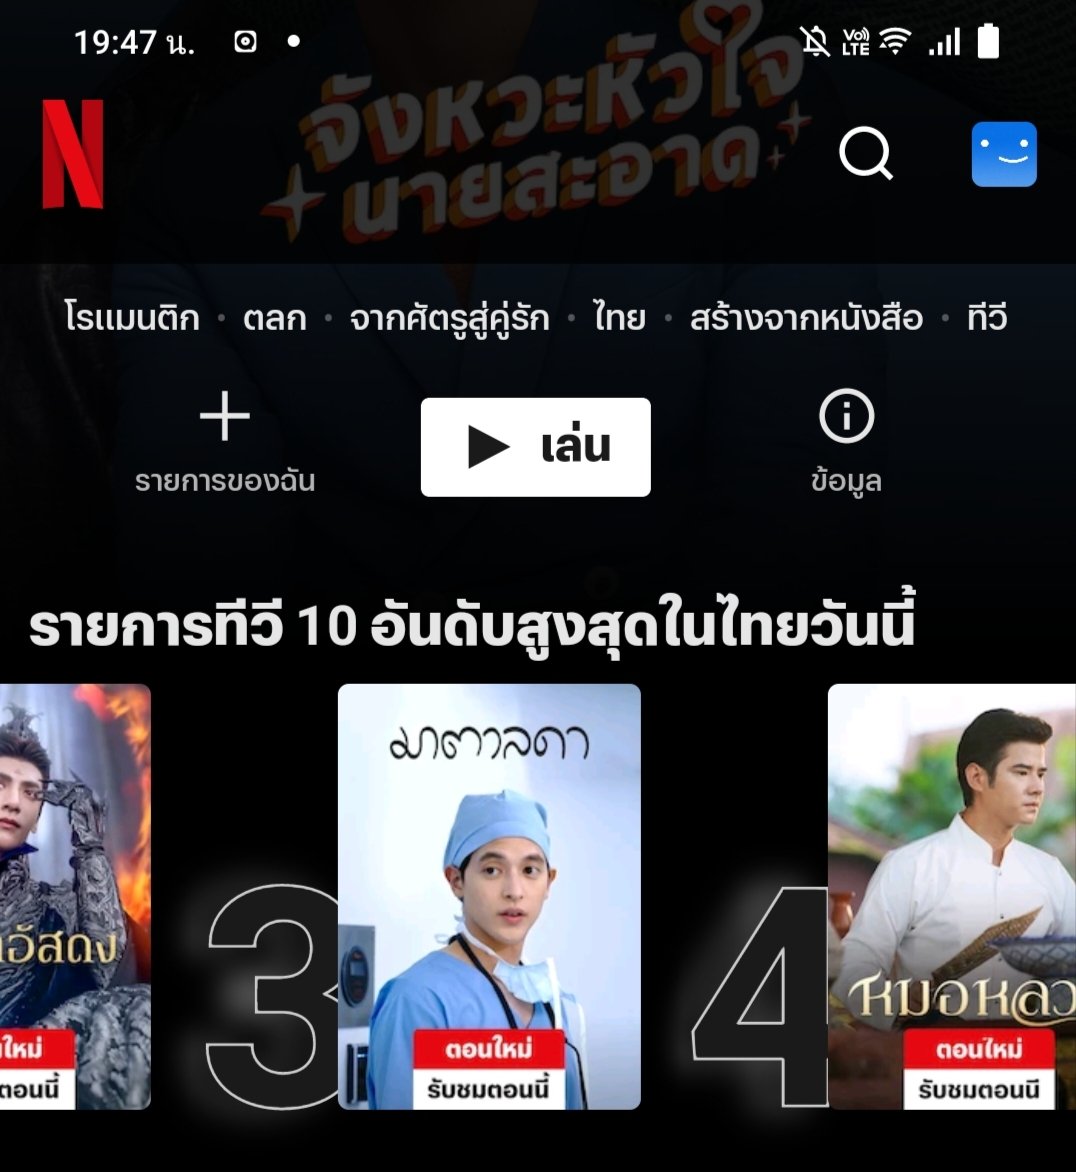 Netflix อันดับ 3 แล้ว ดีต่อใจ🧑‍⚕️😊♥️
#มาตาลดาep3 #มาตาลดา
#Tothemoonandback 
#เจมส์จิ #jirayu_jj
#NetflixTH